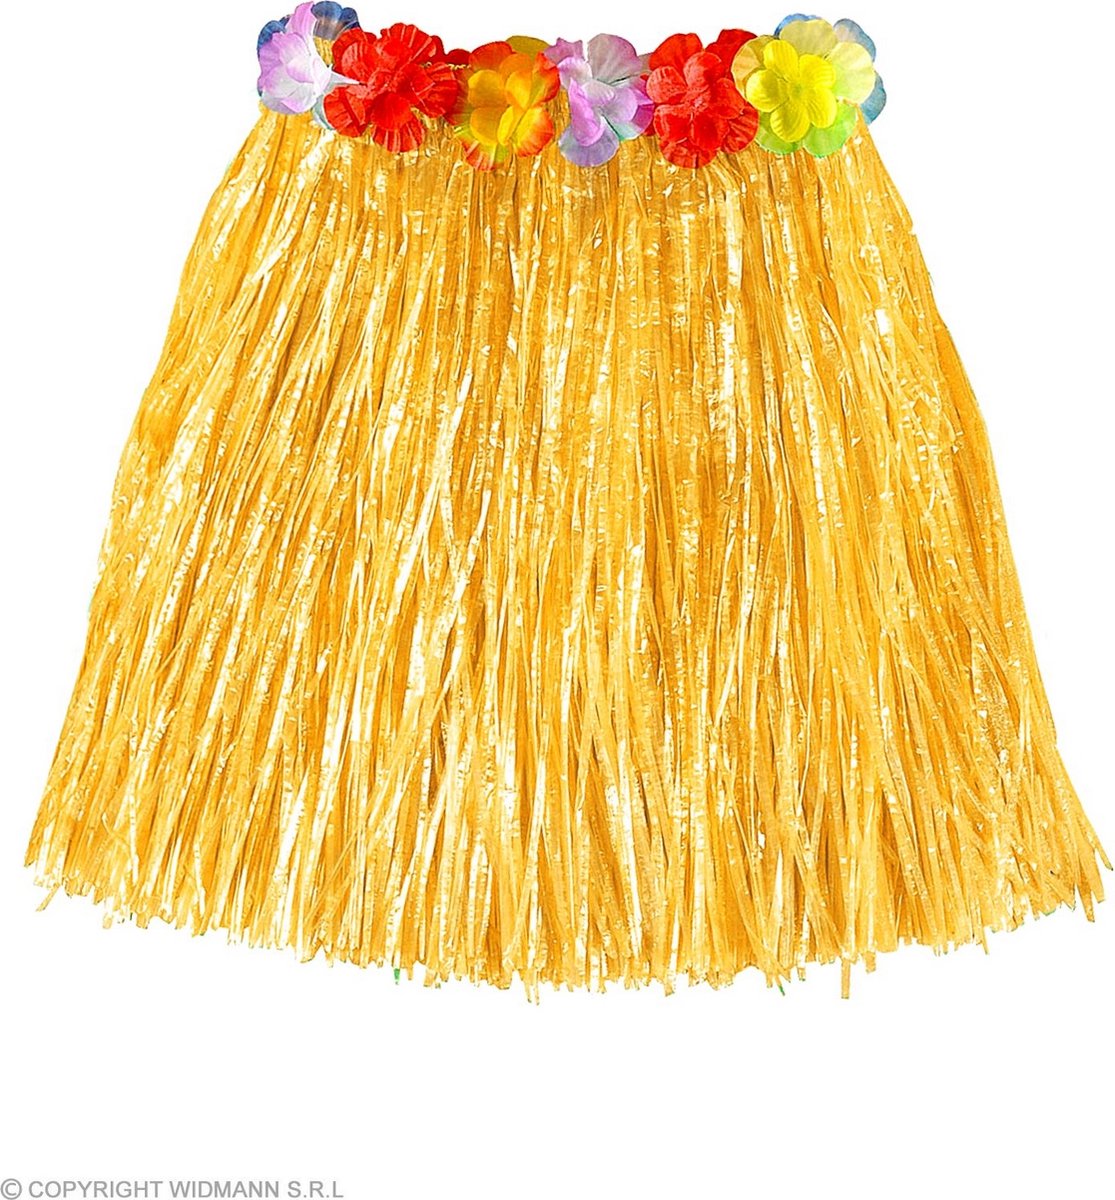 Widmann - Hawaii & Carribean & Tropisch Kostuum - Hoe Lal La Mini Hawaii Rokje 45 Centimeter Vrouw - wit / beige - One Size - Carnavalskleding - Verkleedkleding